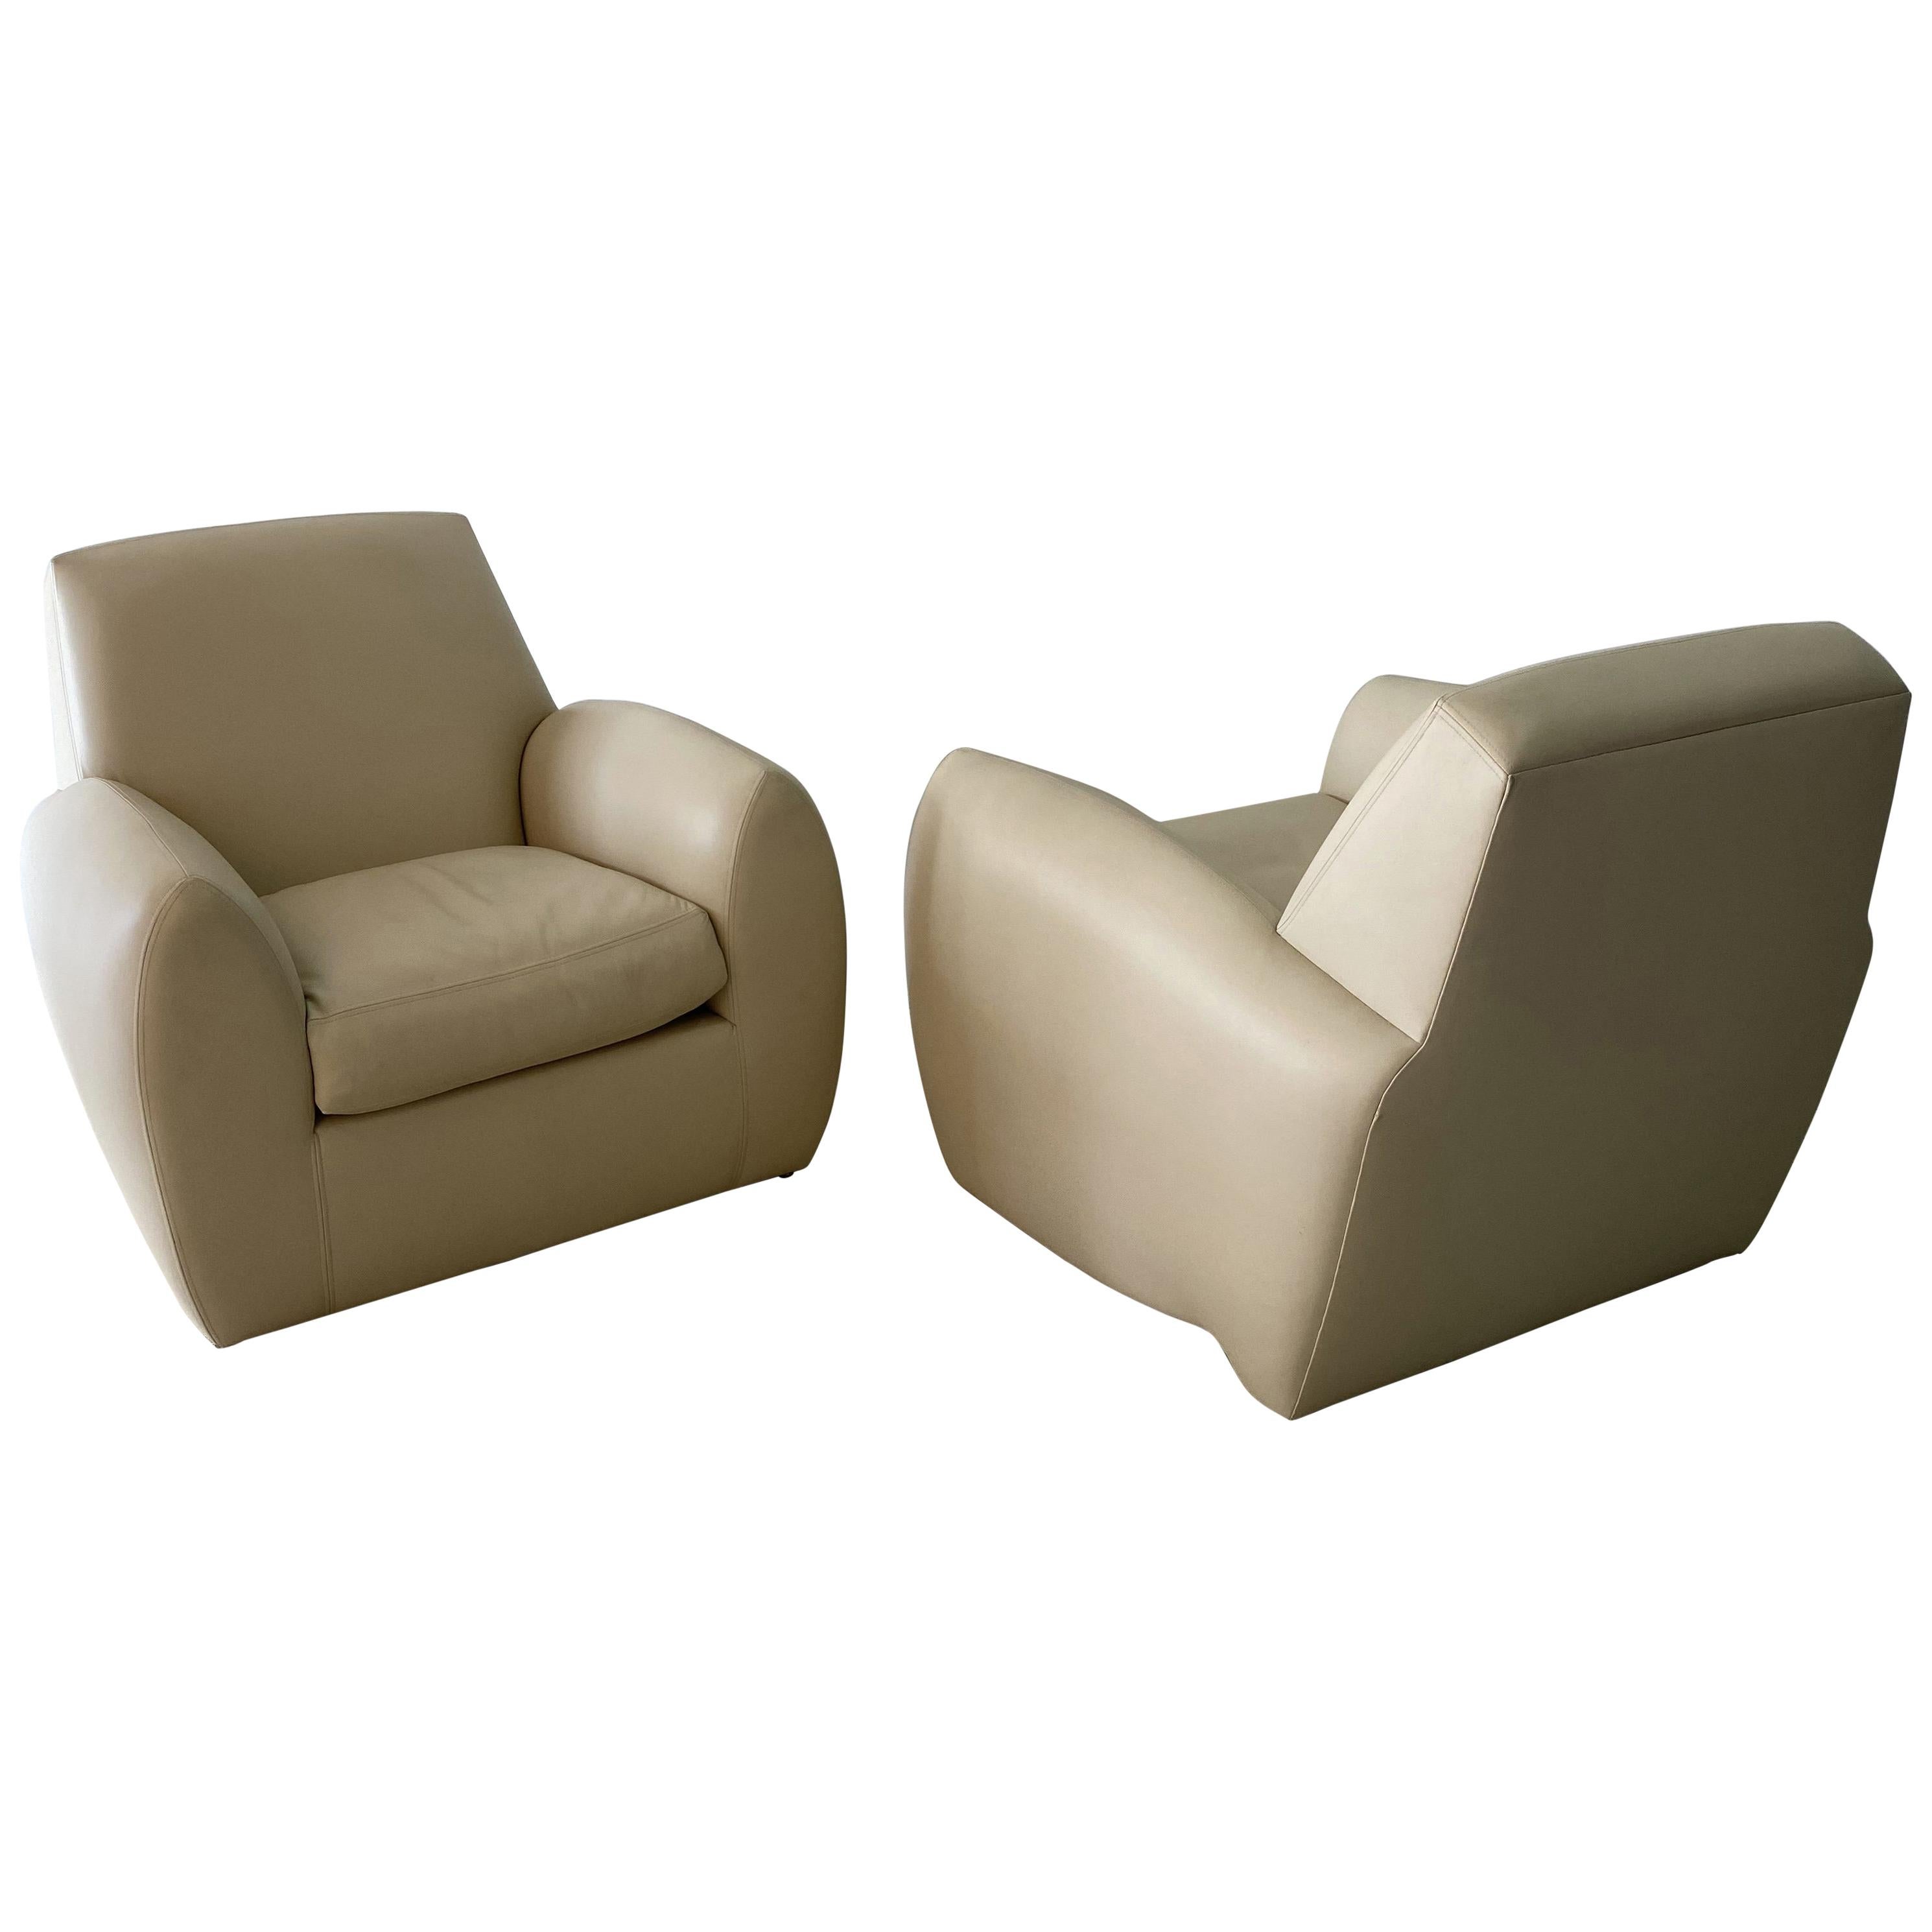 Pair of American Modern Cream Leather Ken Zu Club Chairs, Dakota Jackson